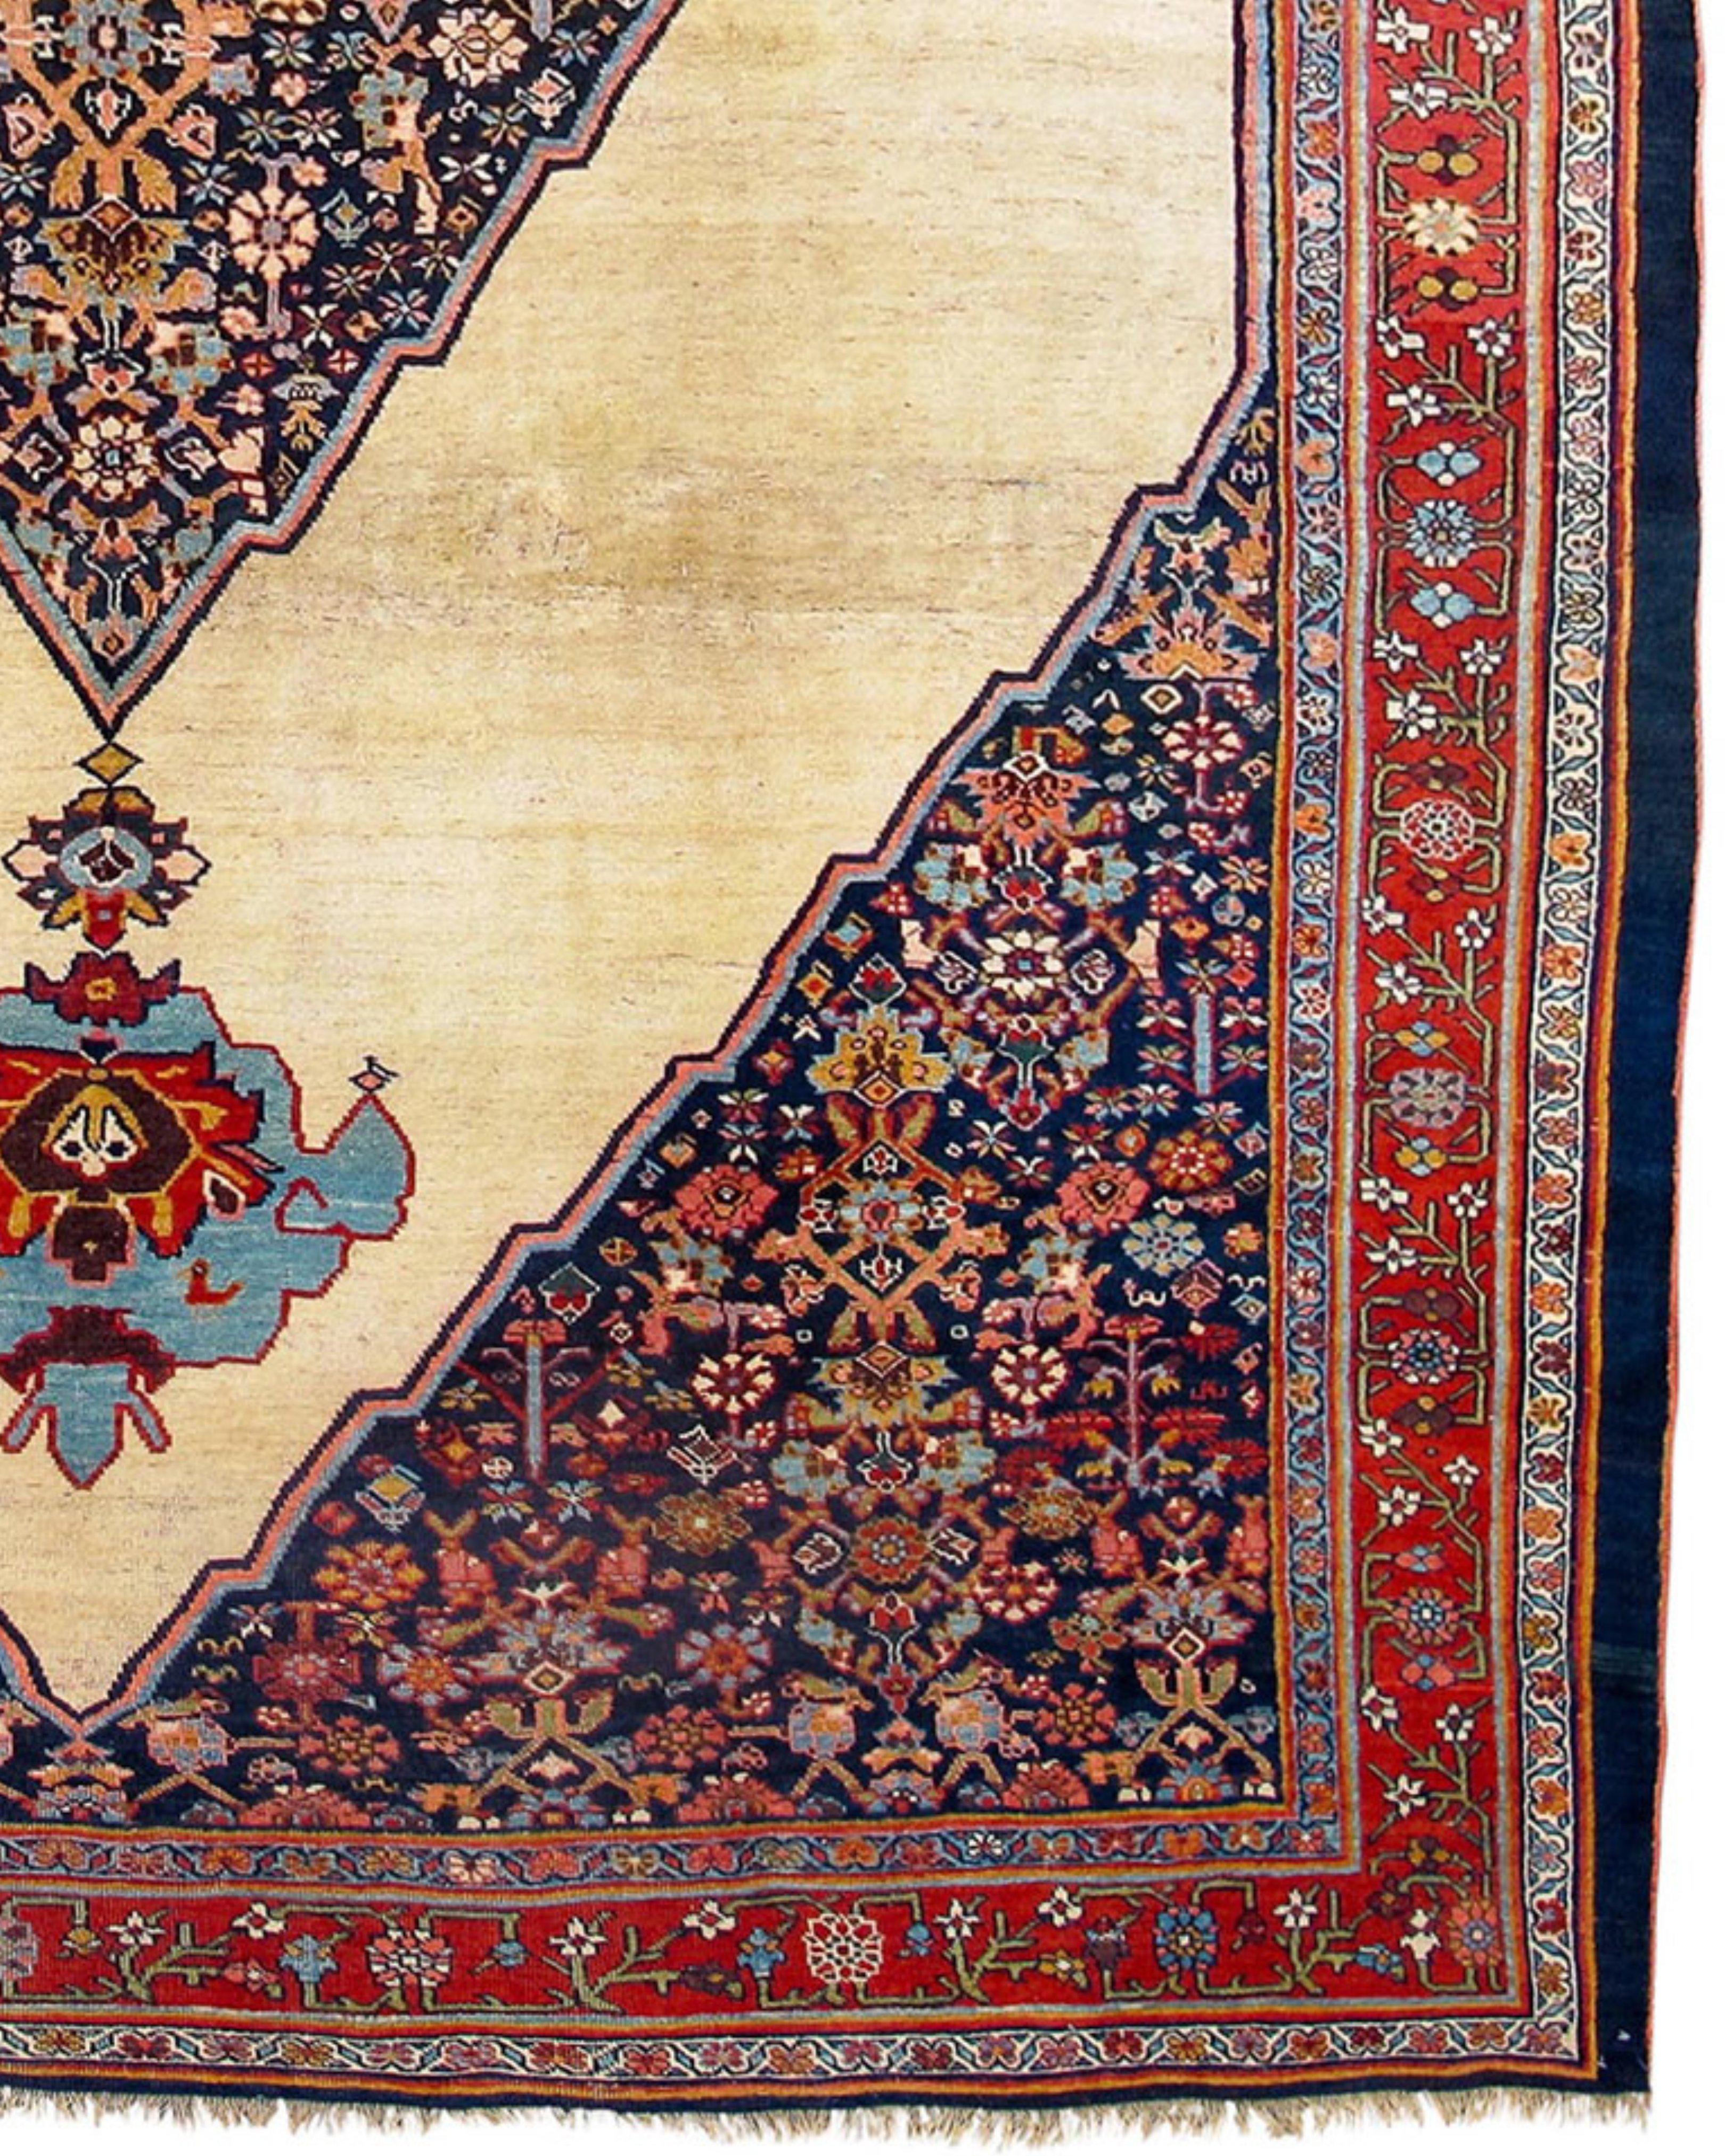 Bidjar Carpet, 4th Quarter 19th Century

Additional Information:
Dimensions: 9'0